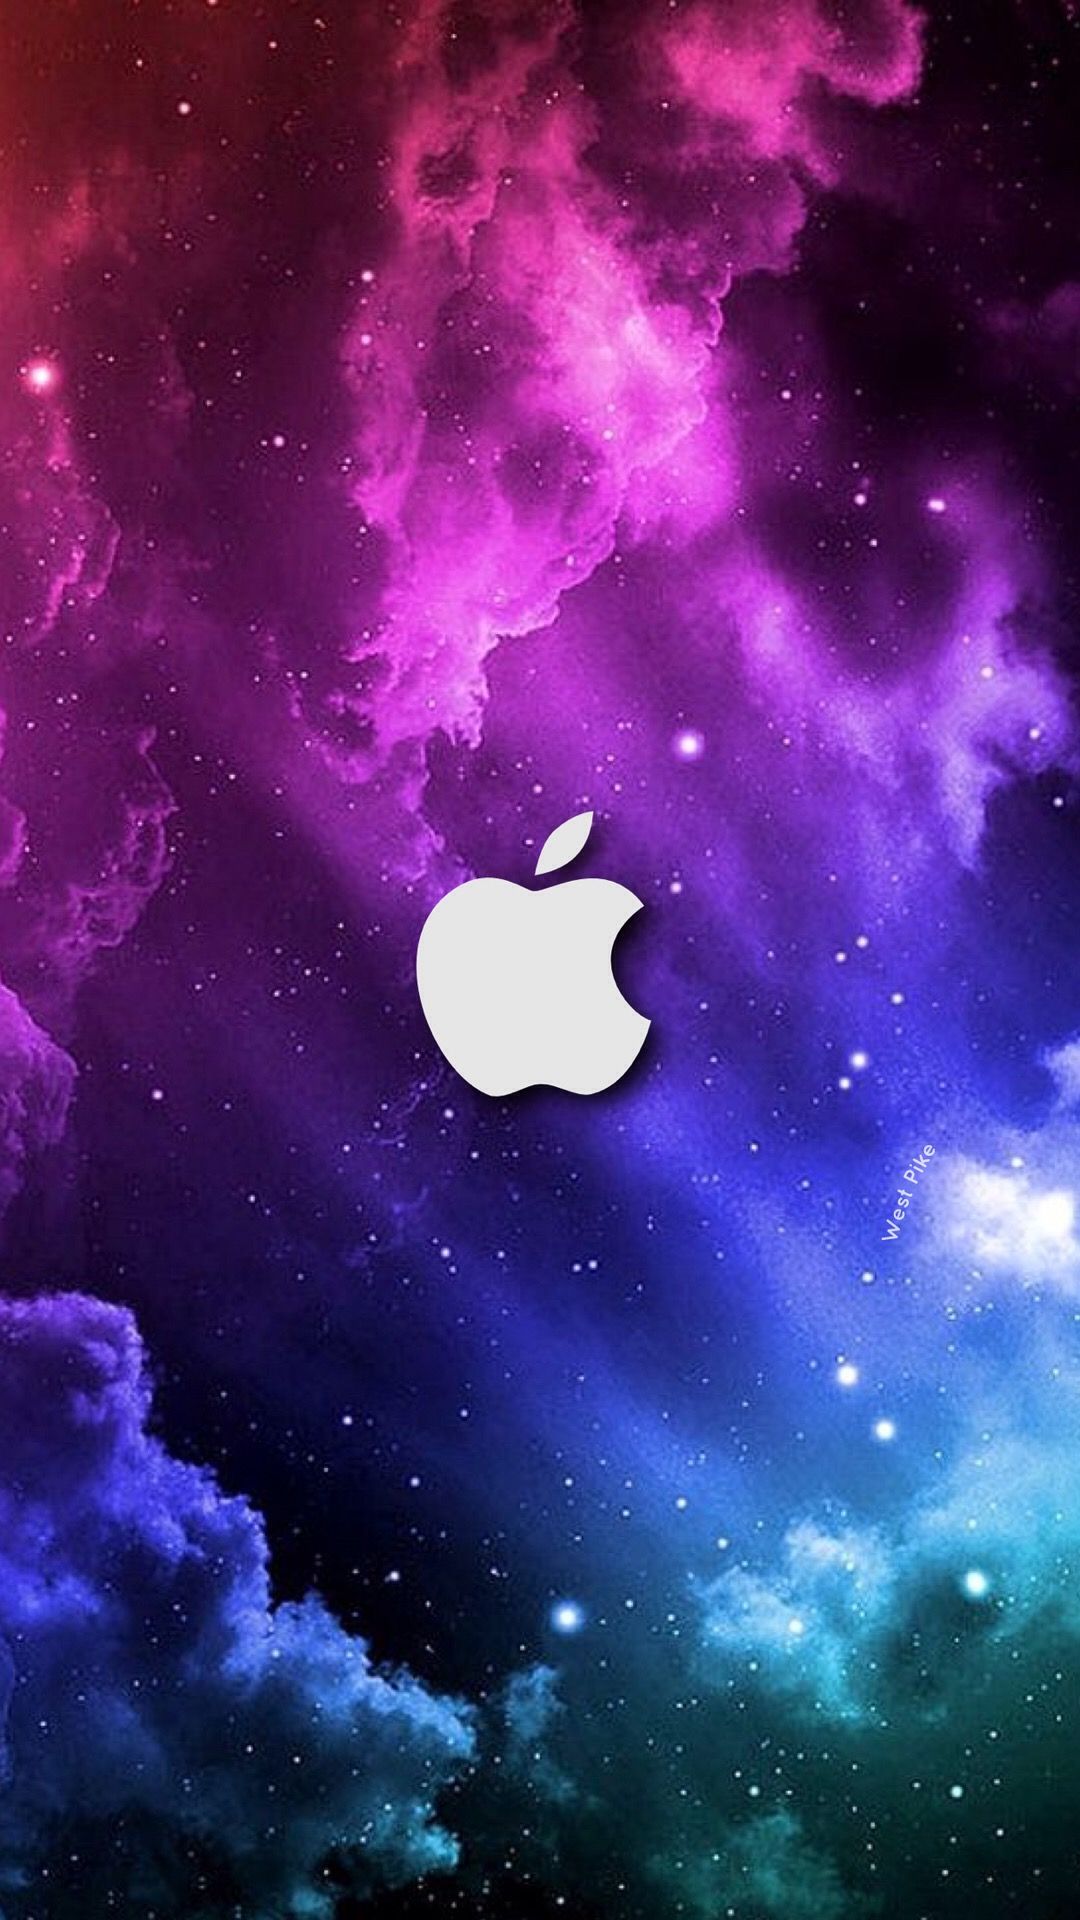 Galaxy Apple Logo Wallpaper Free Galaxy Apple Logo Background